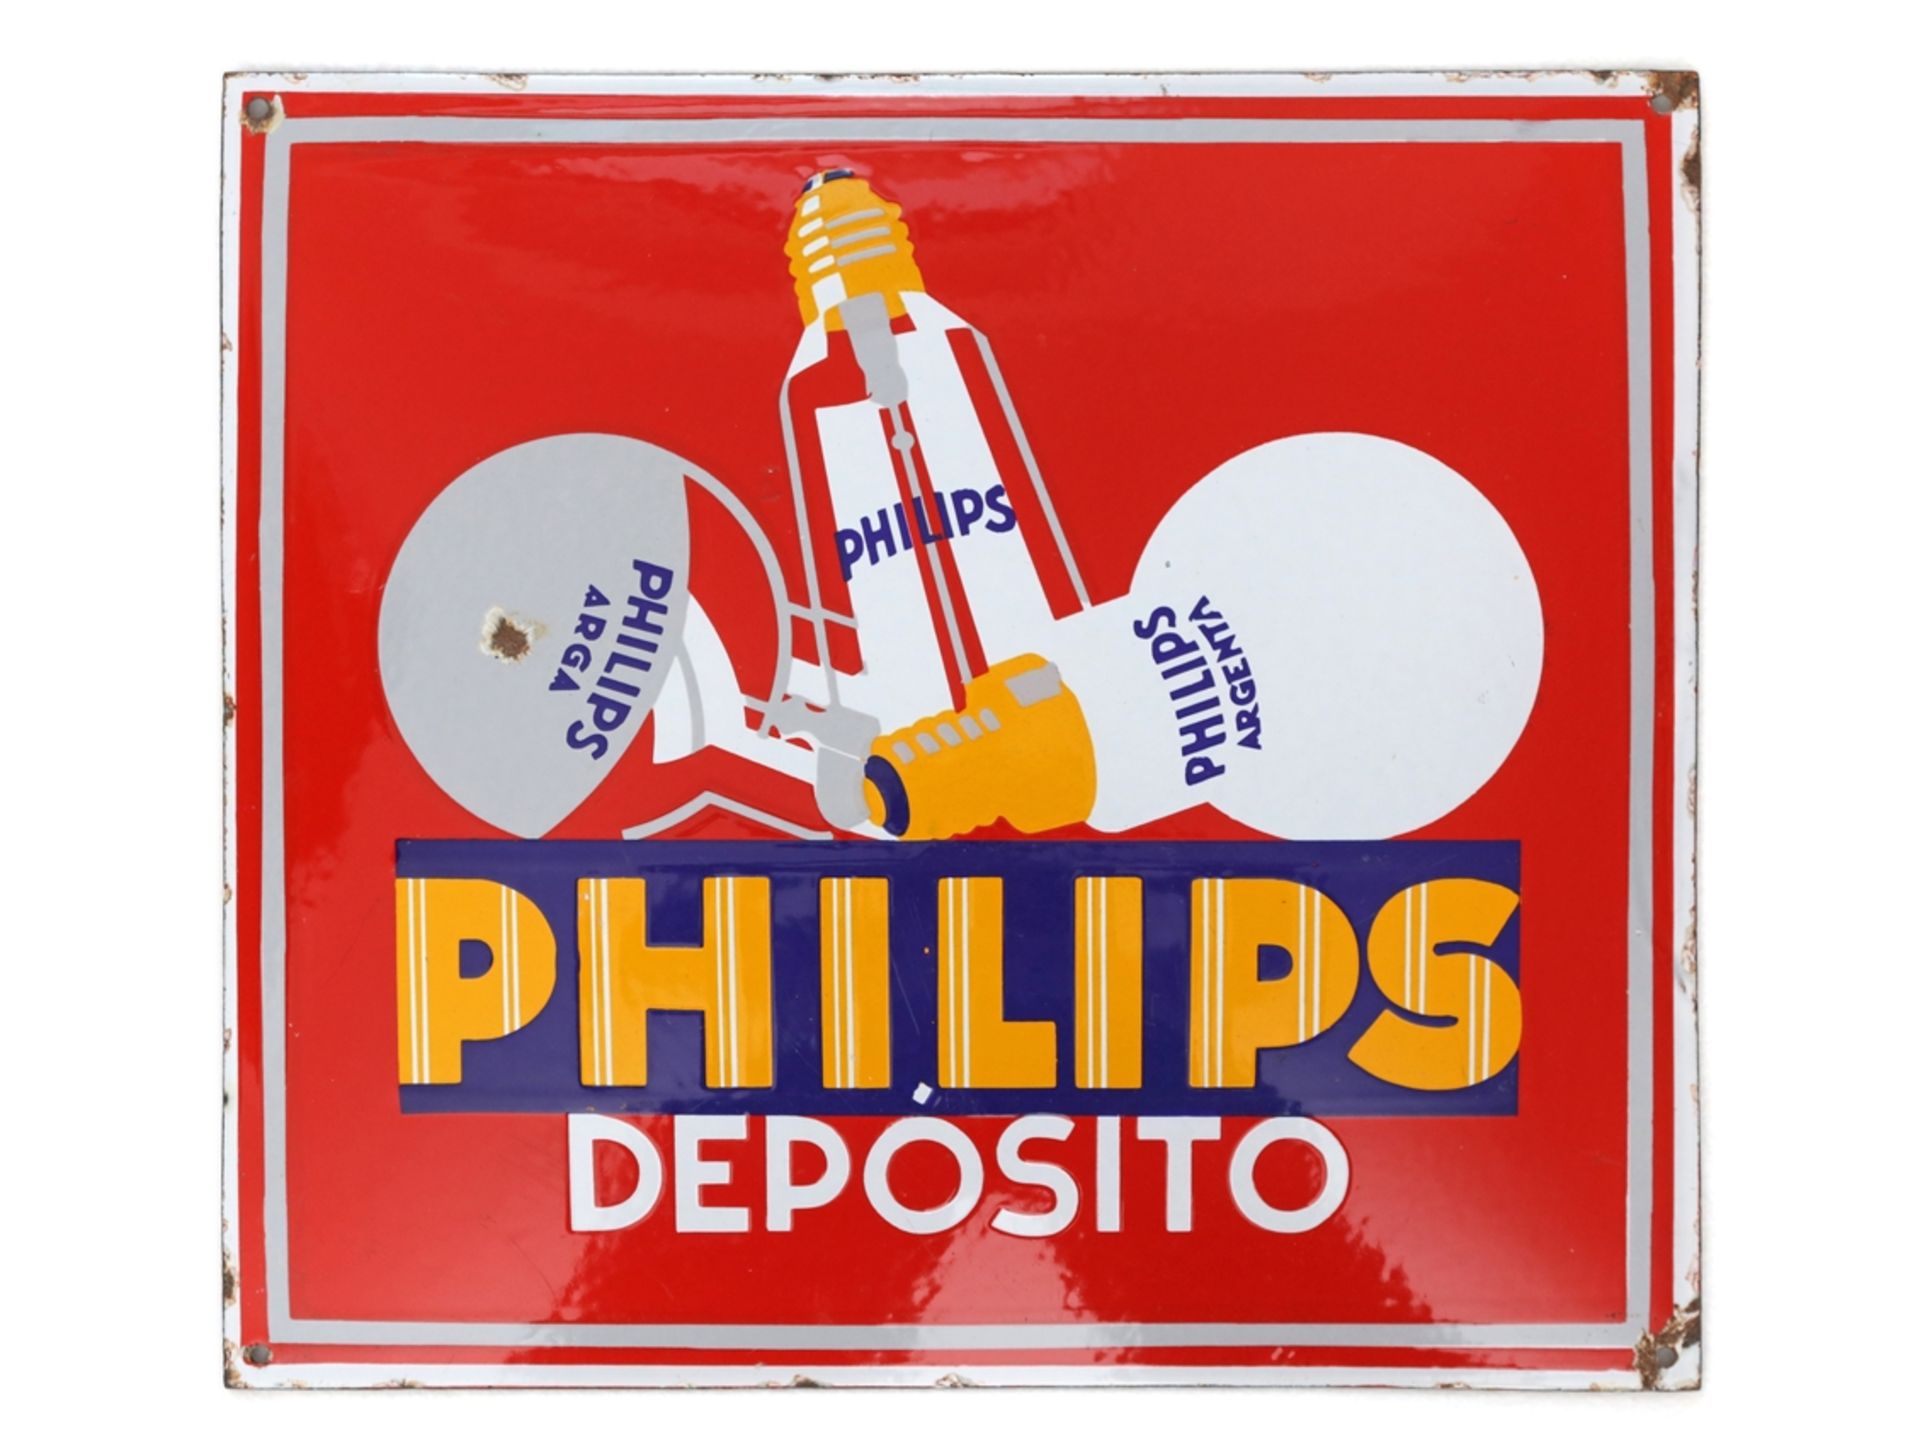 Enamel sign Philips Deposito, Spain, around 1930 - Image 7 of 7